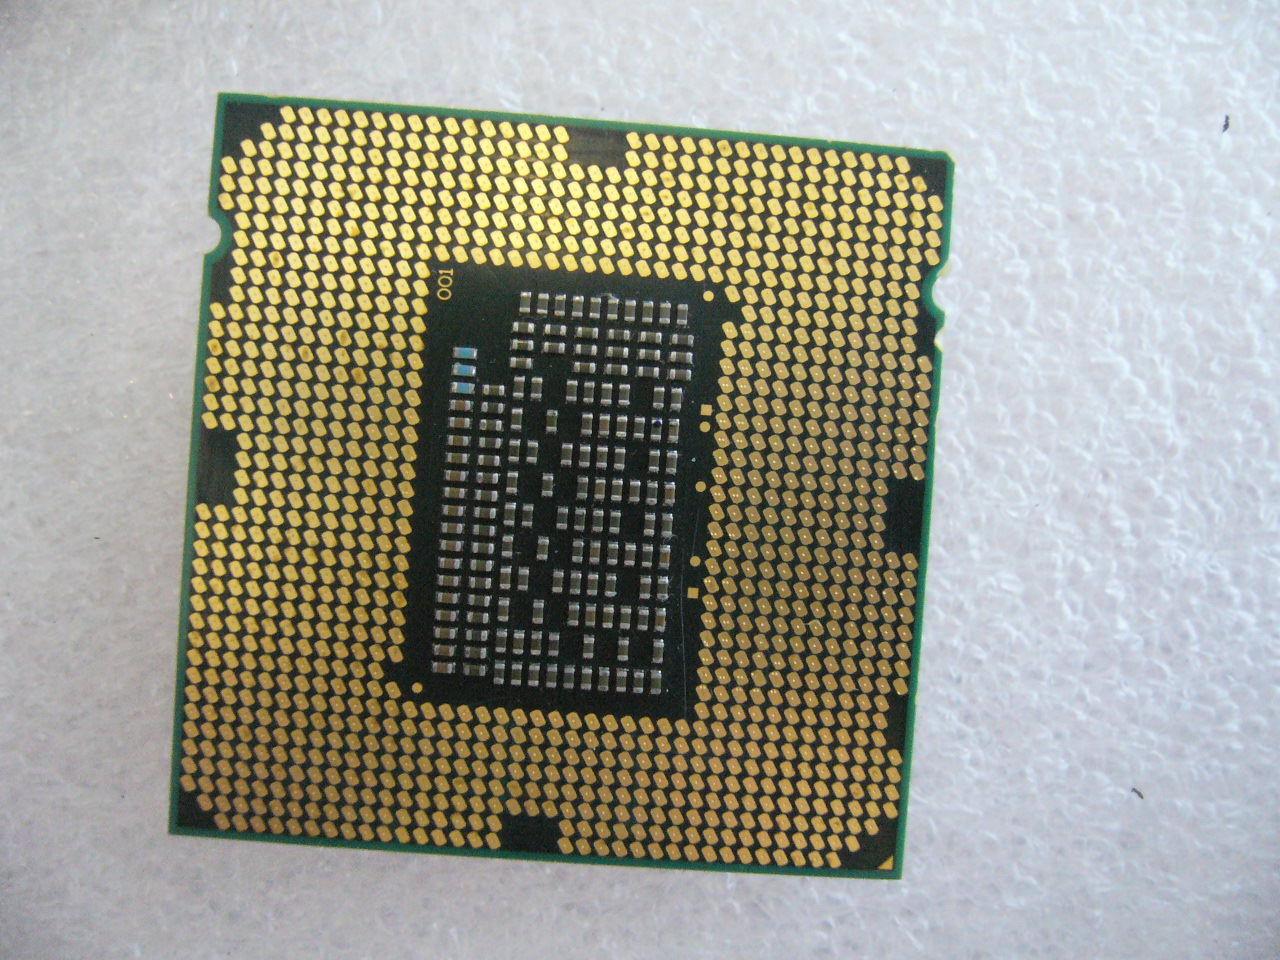 QTY 1x Intel CPU i5-2400S Quad-Cores 2.50Ghz LGA1155 SR00S NOT WORKING - Click Image to Close